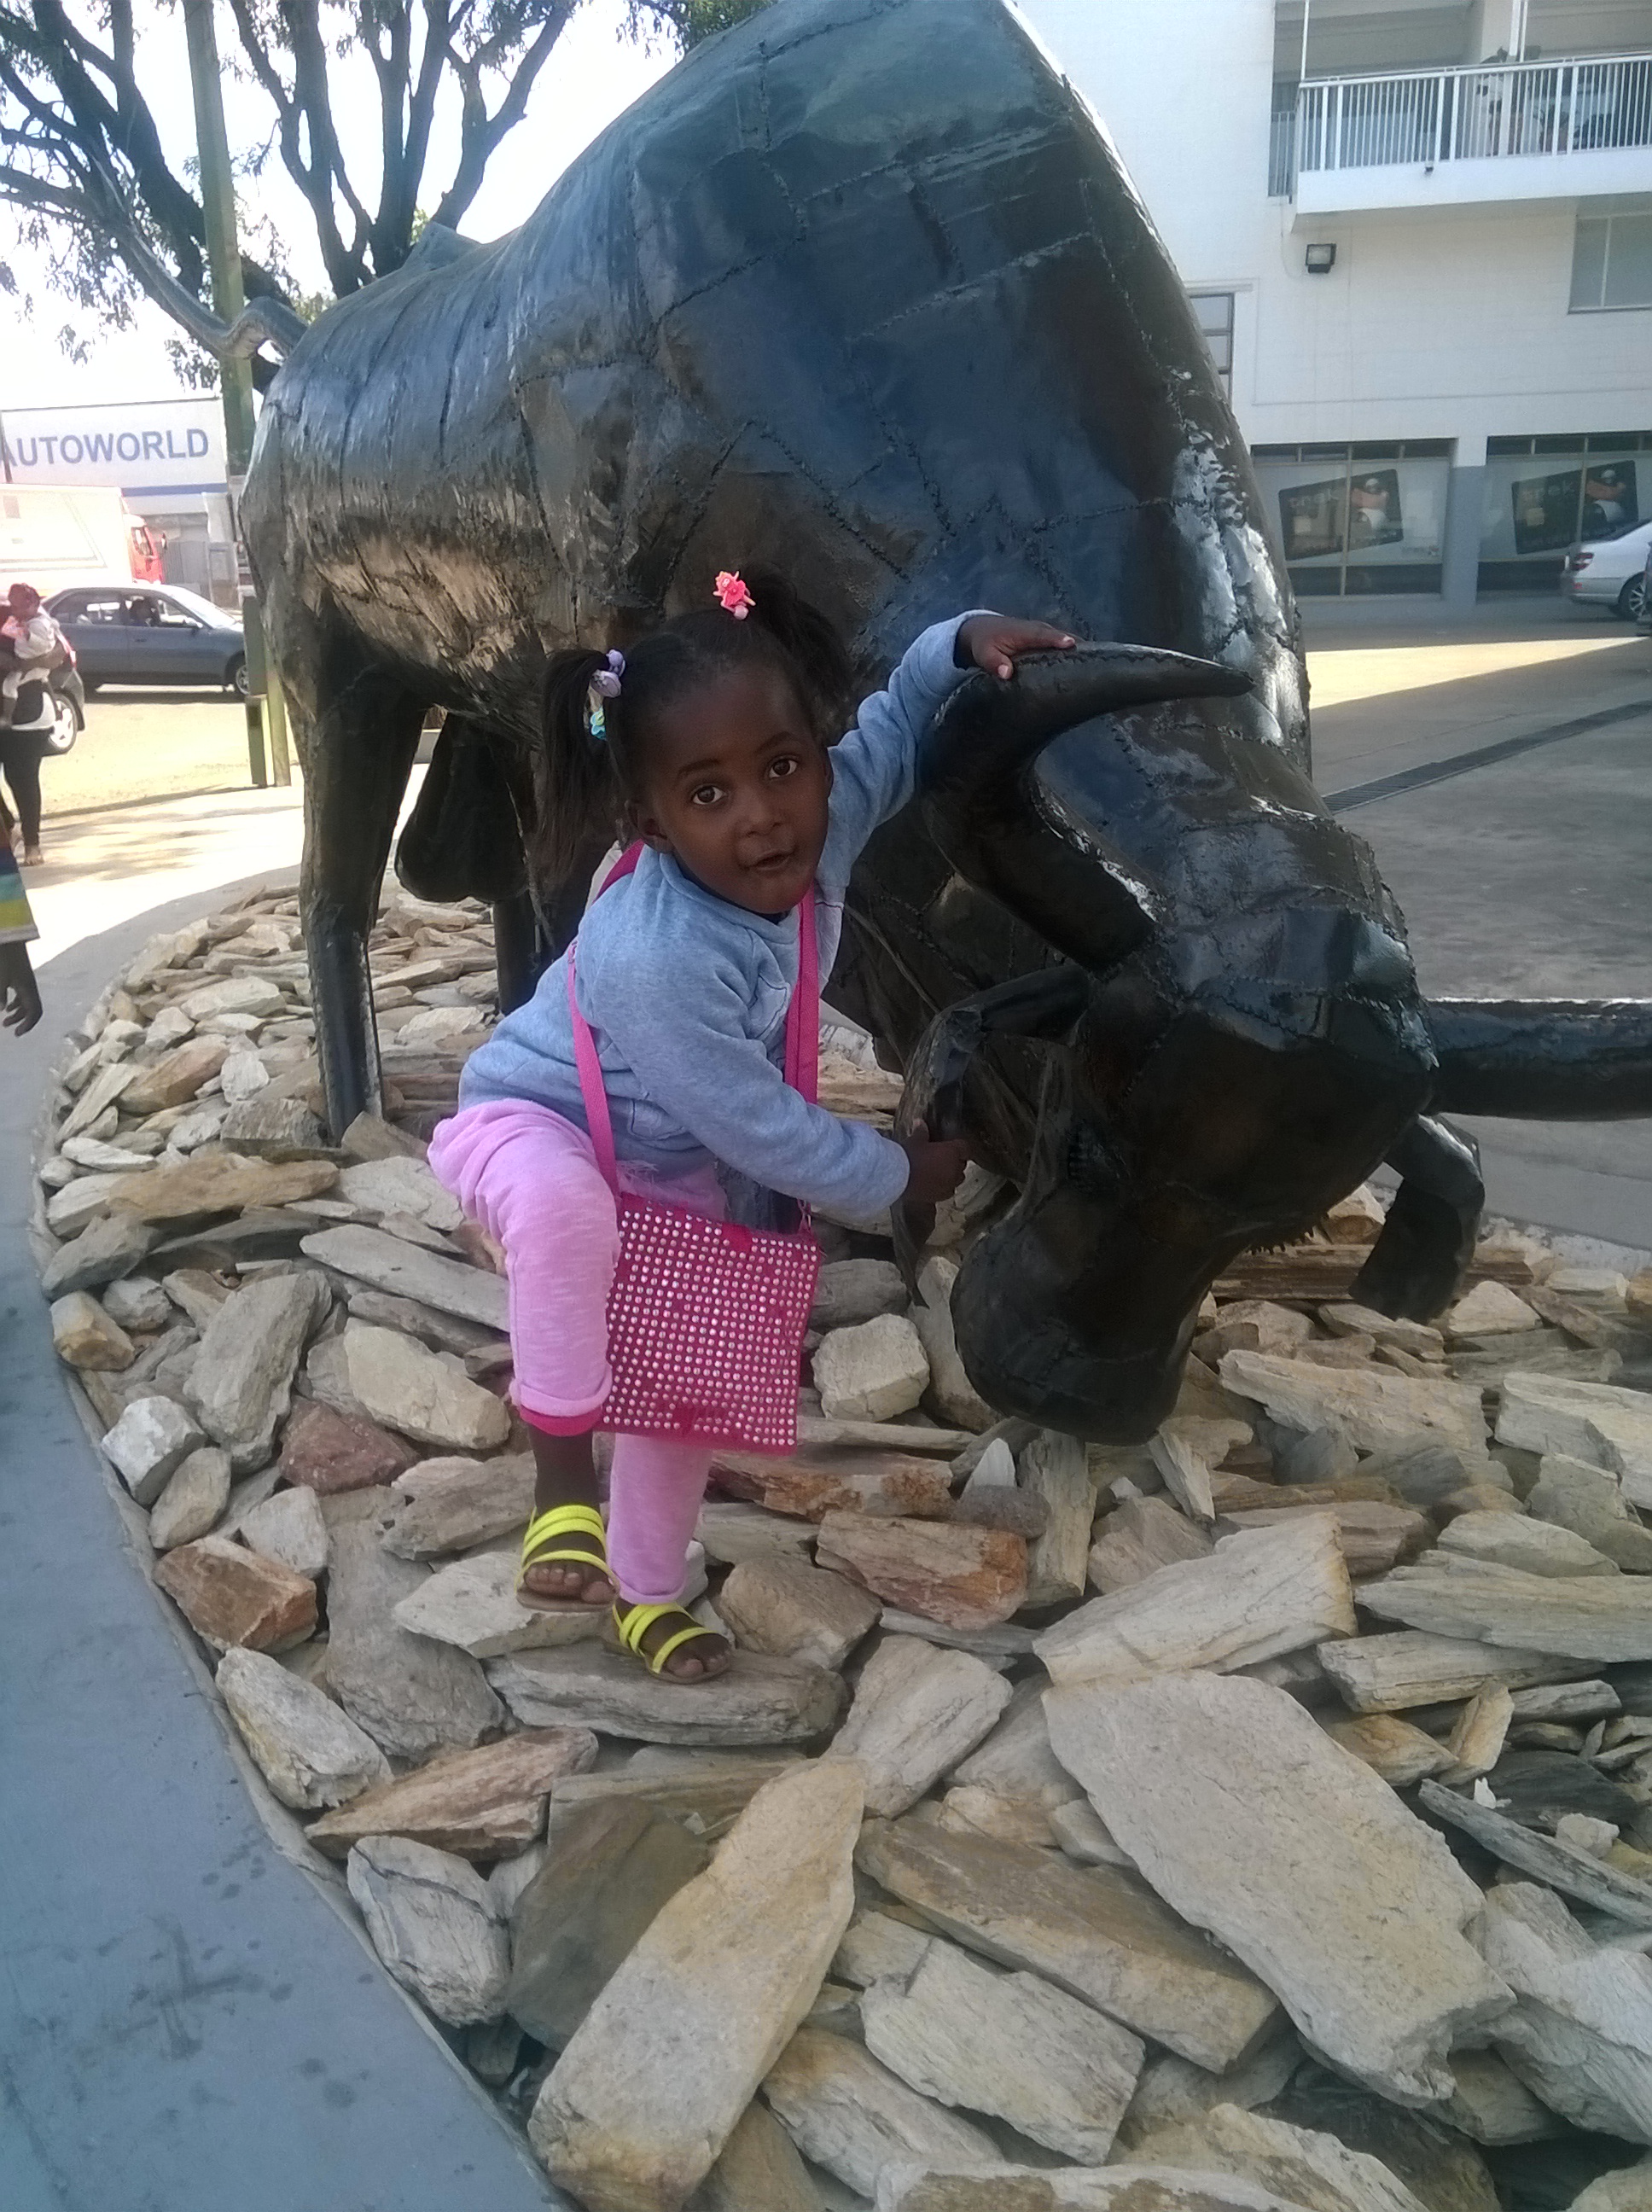 Taming the bull - Imgur